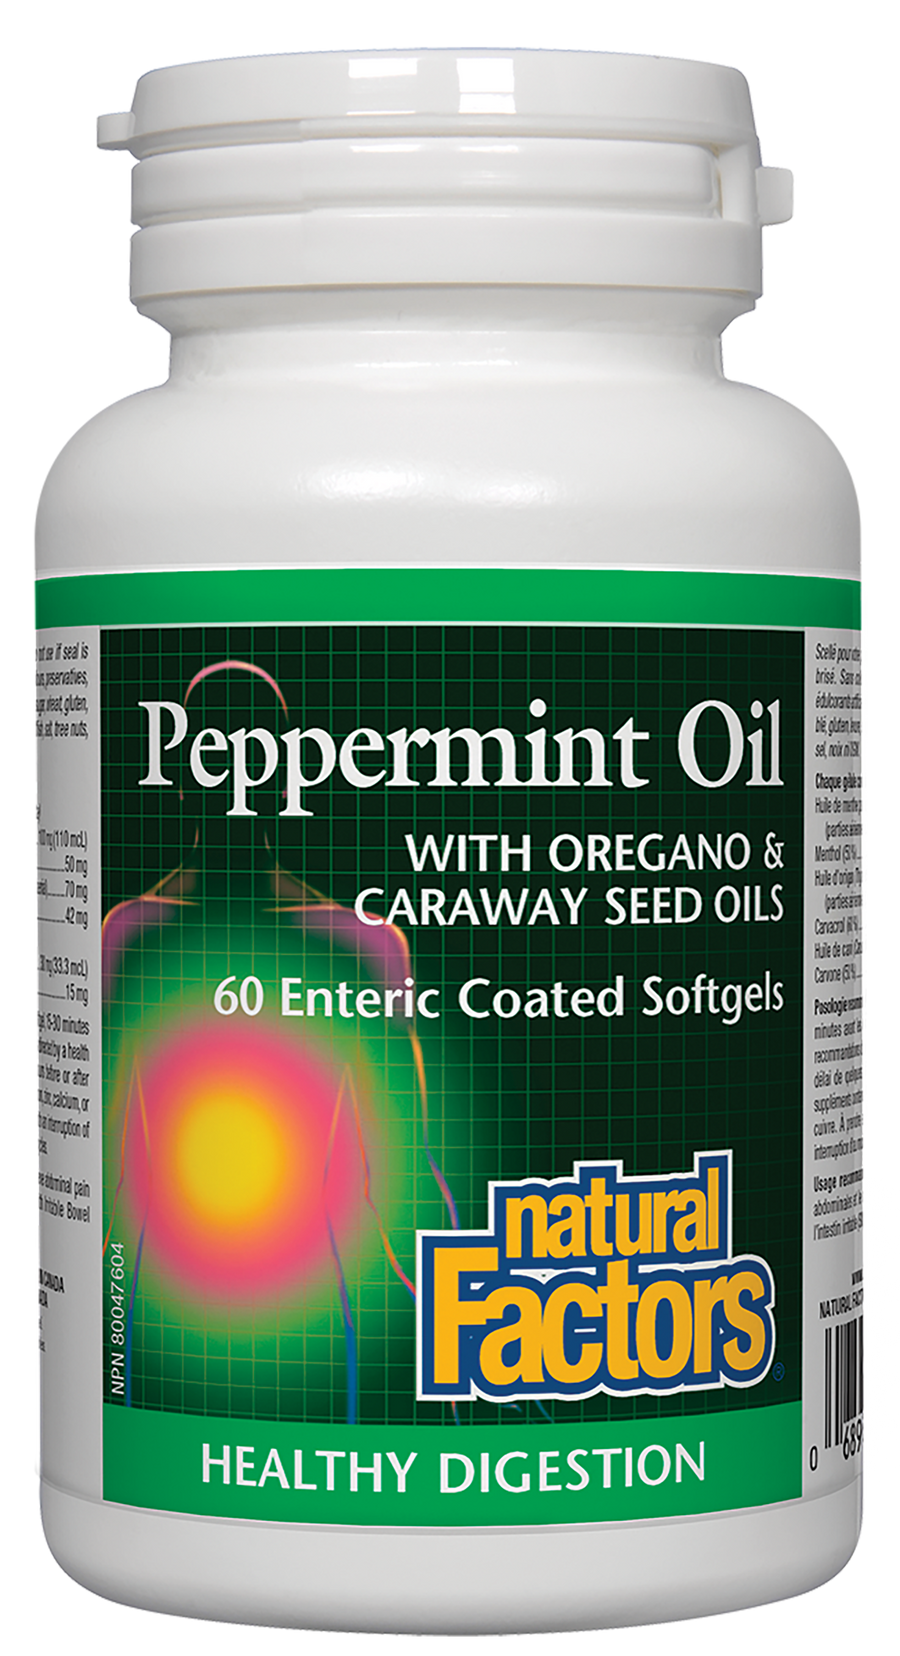 Natural Factors Peppermint Oil 60 Enteric Coated Softgels